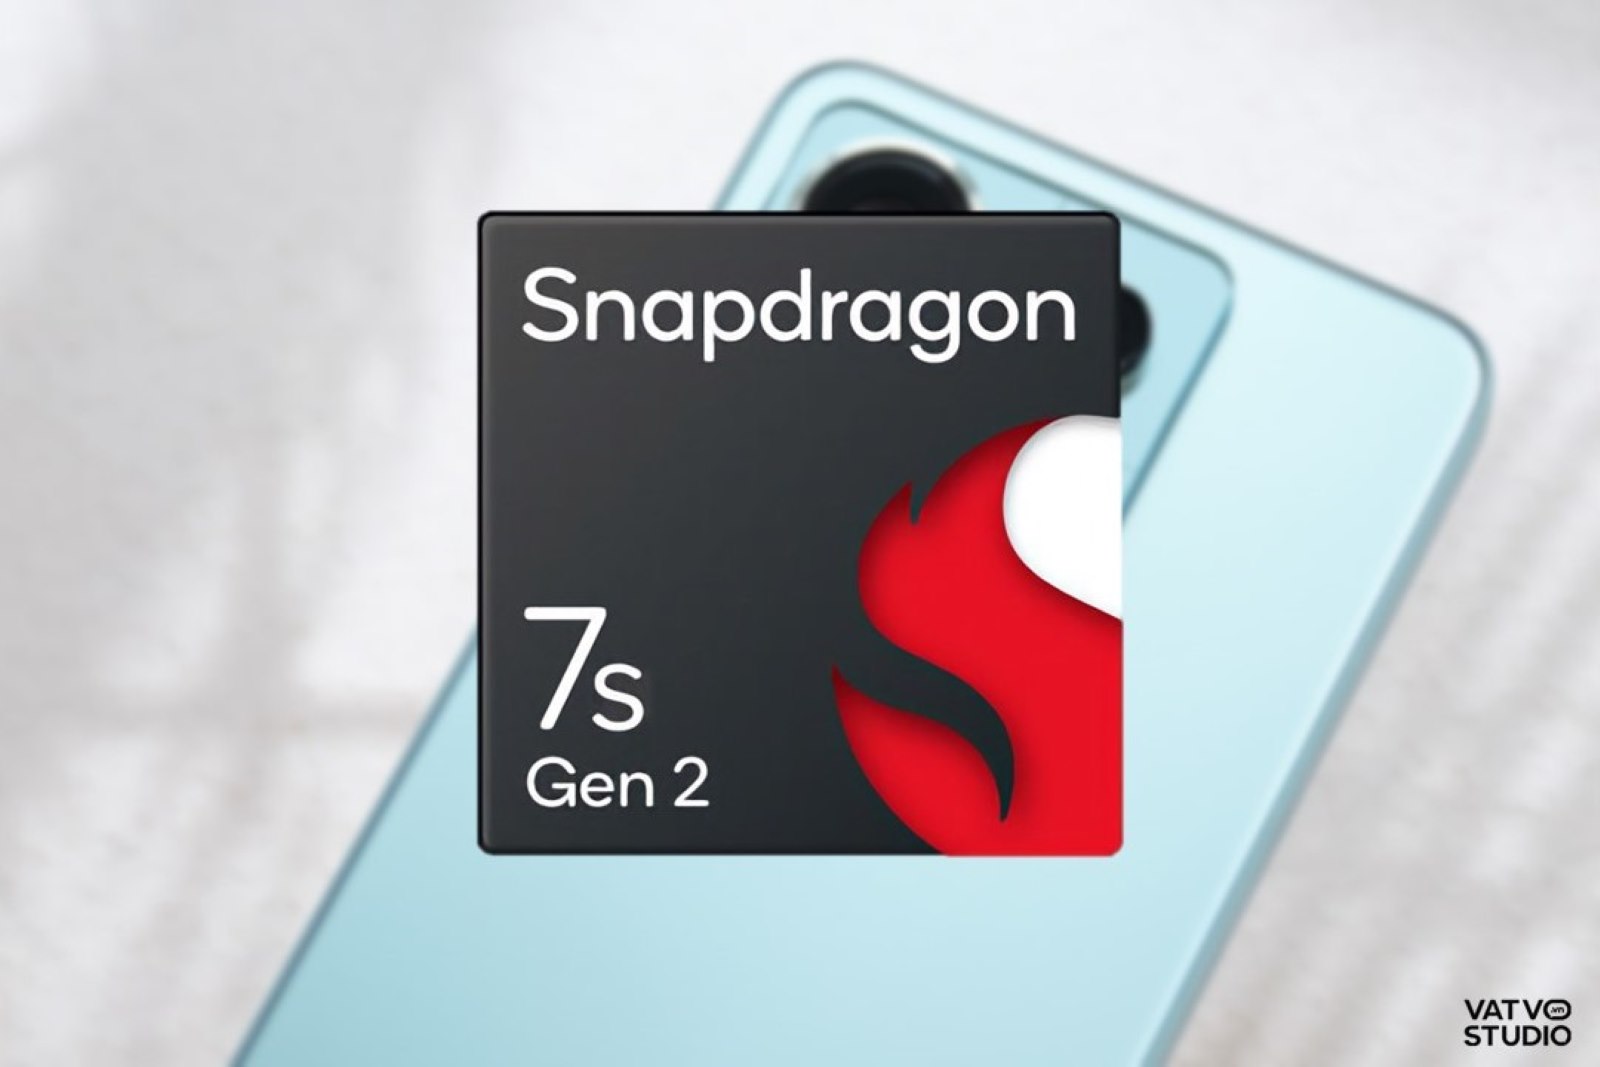 Snapdragon 7S Gen 2